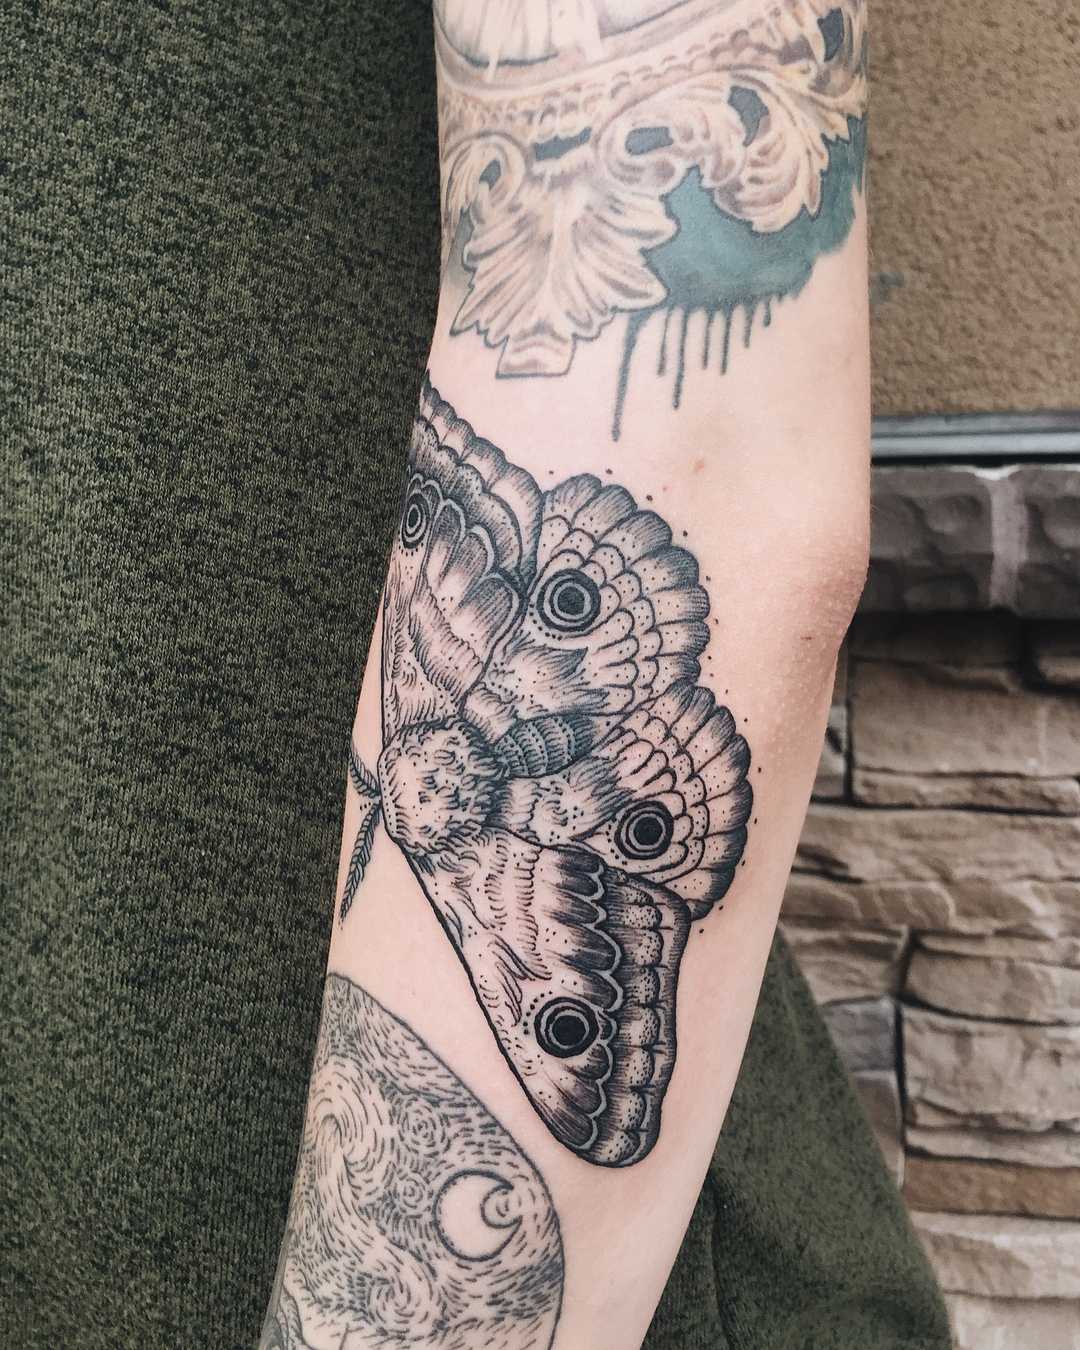 Furry moth tattoo by Finley Jordan